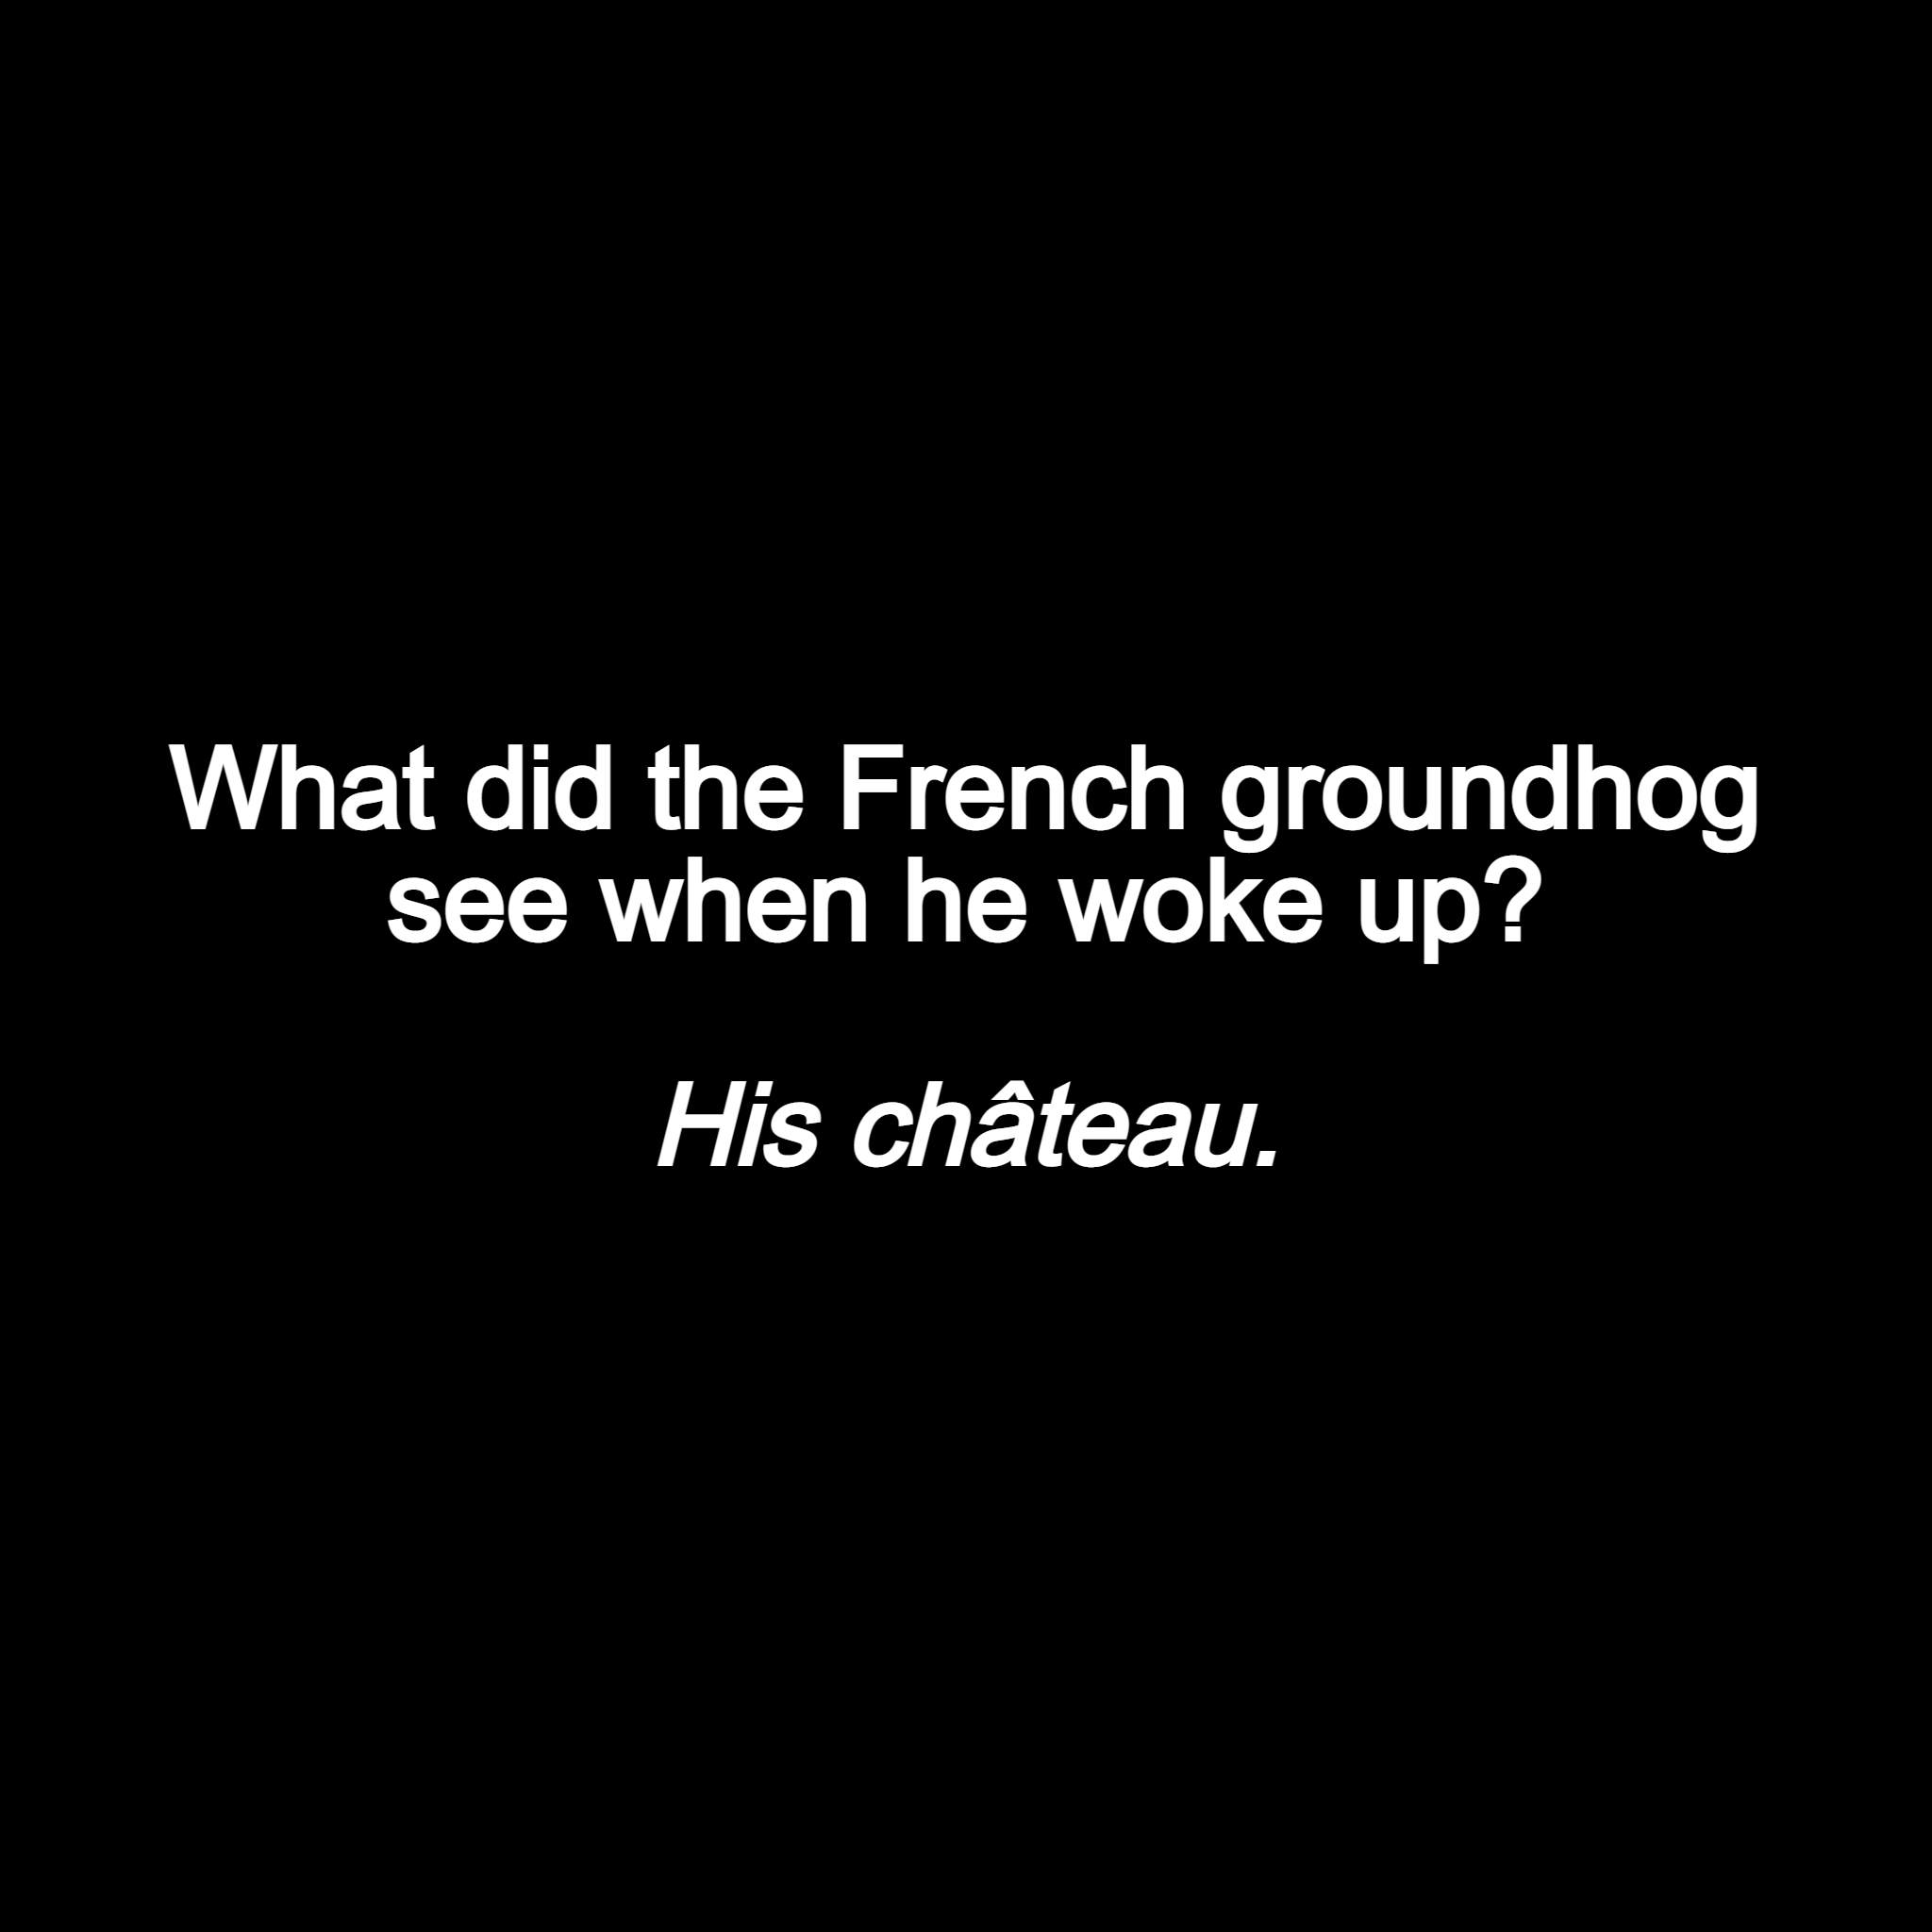 French groundhog.